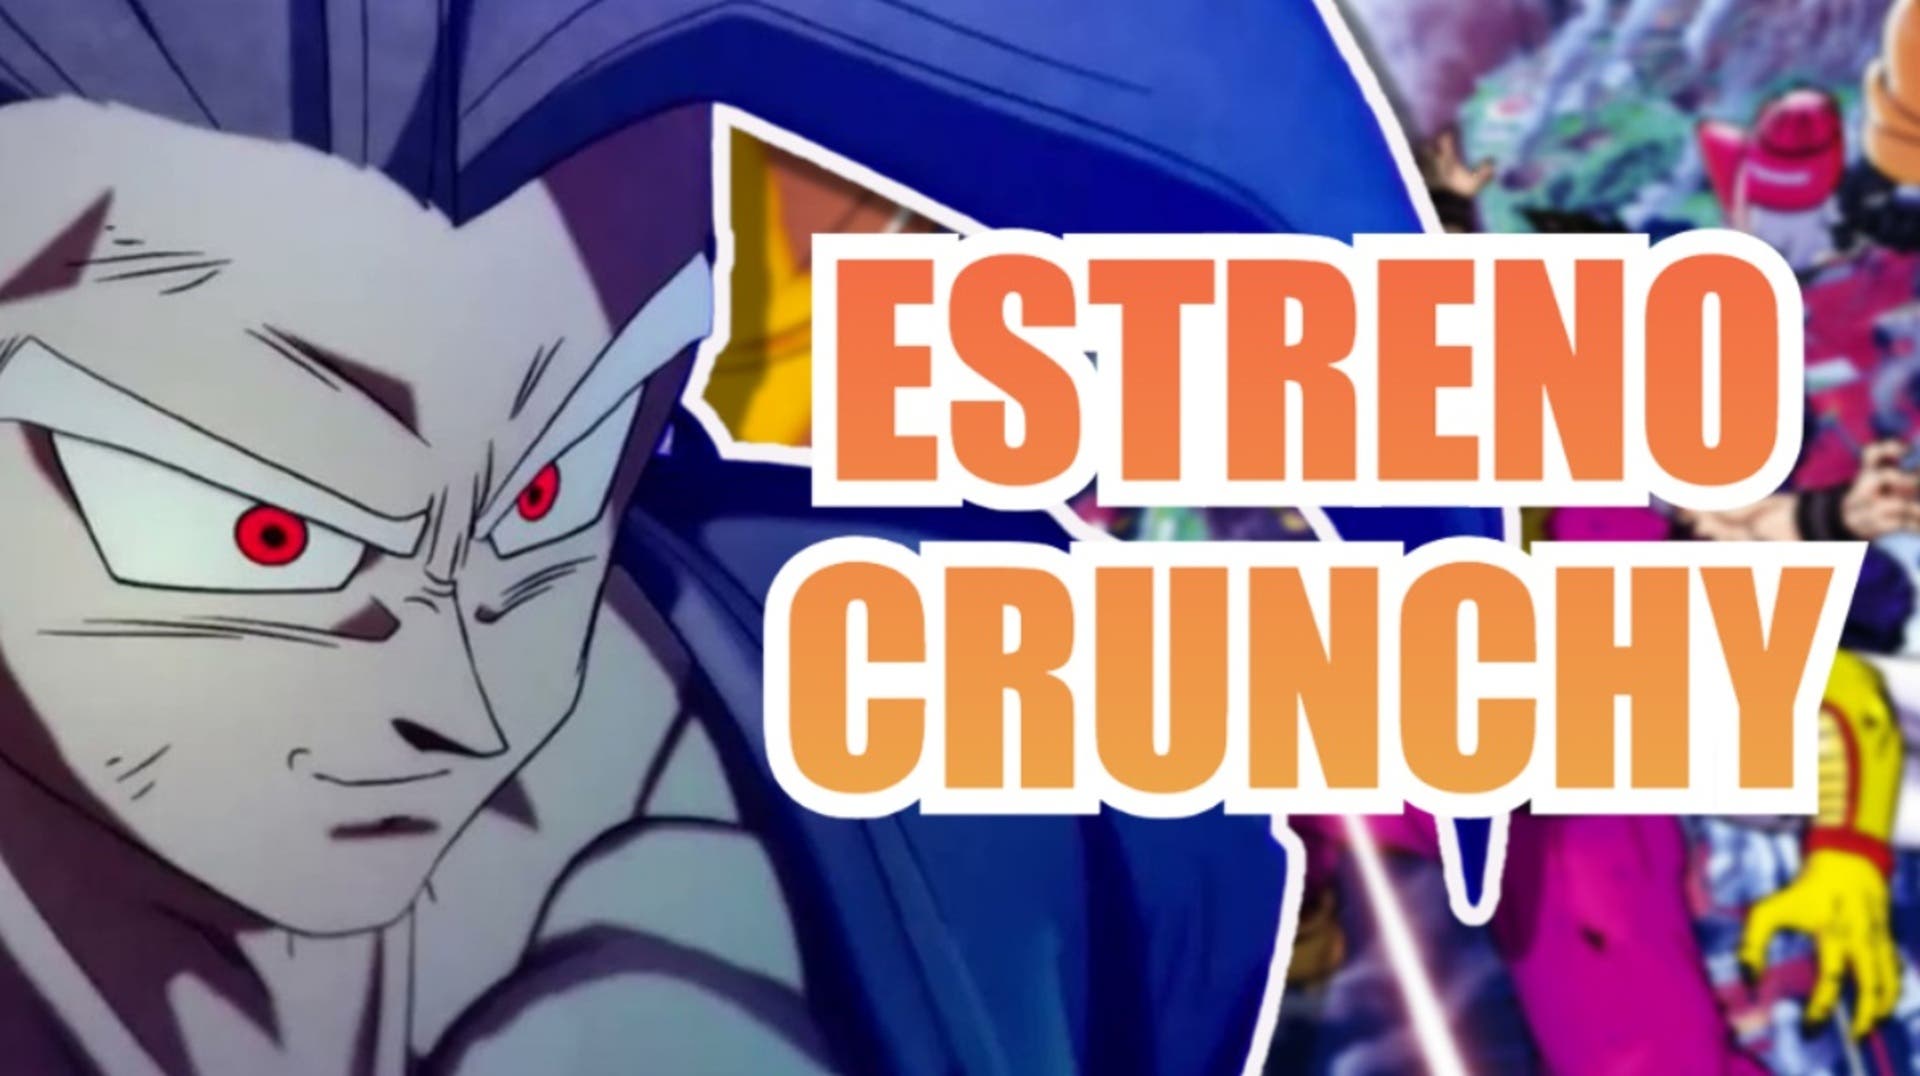 Cuándo se estrena Dragon Ball Super: Super Hero en Crunchyroll